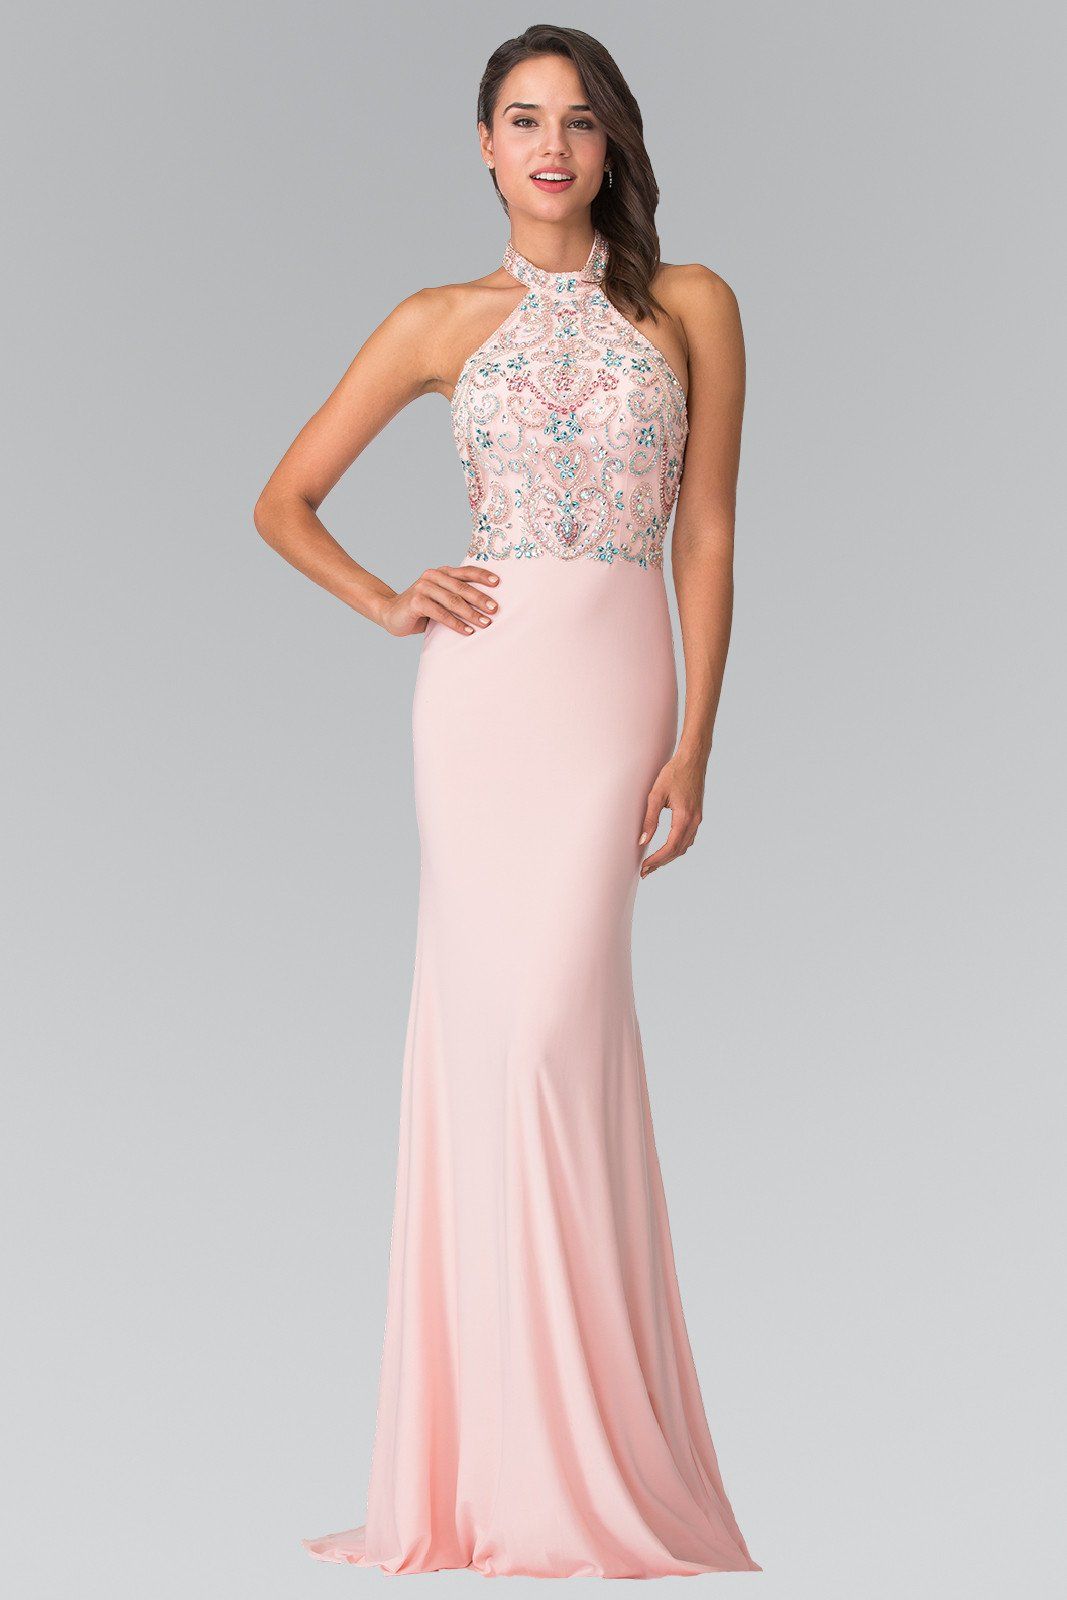 Long Multi-Color Beaded Illusion Halter Dress by Elizabeth K GL2279-Long Formal Dresses-ABC Fashion